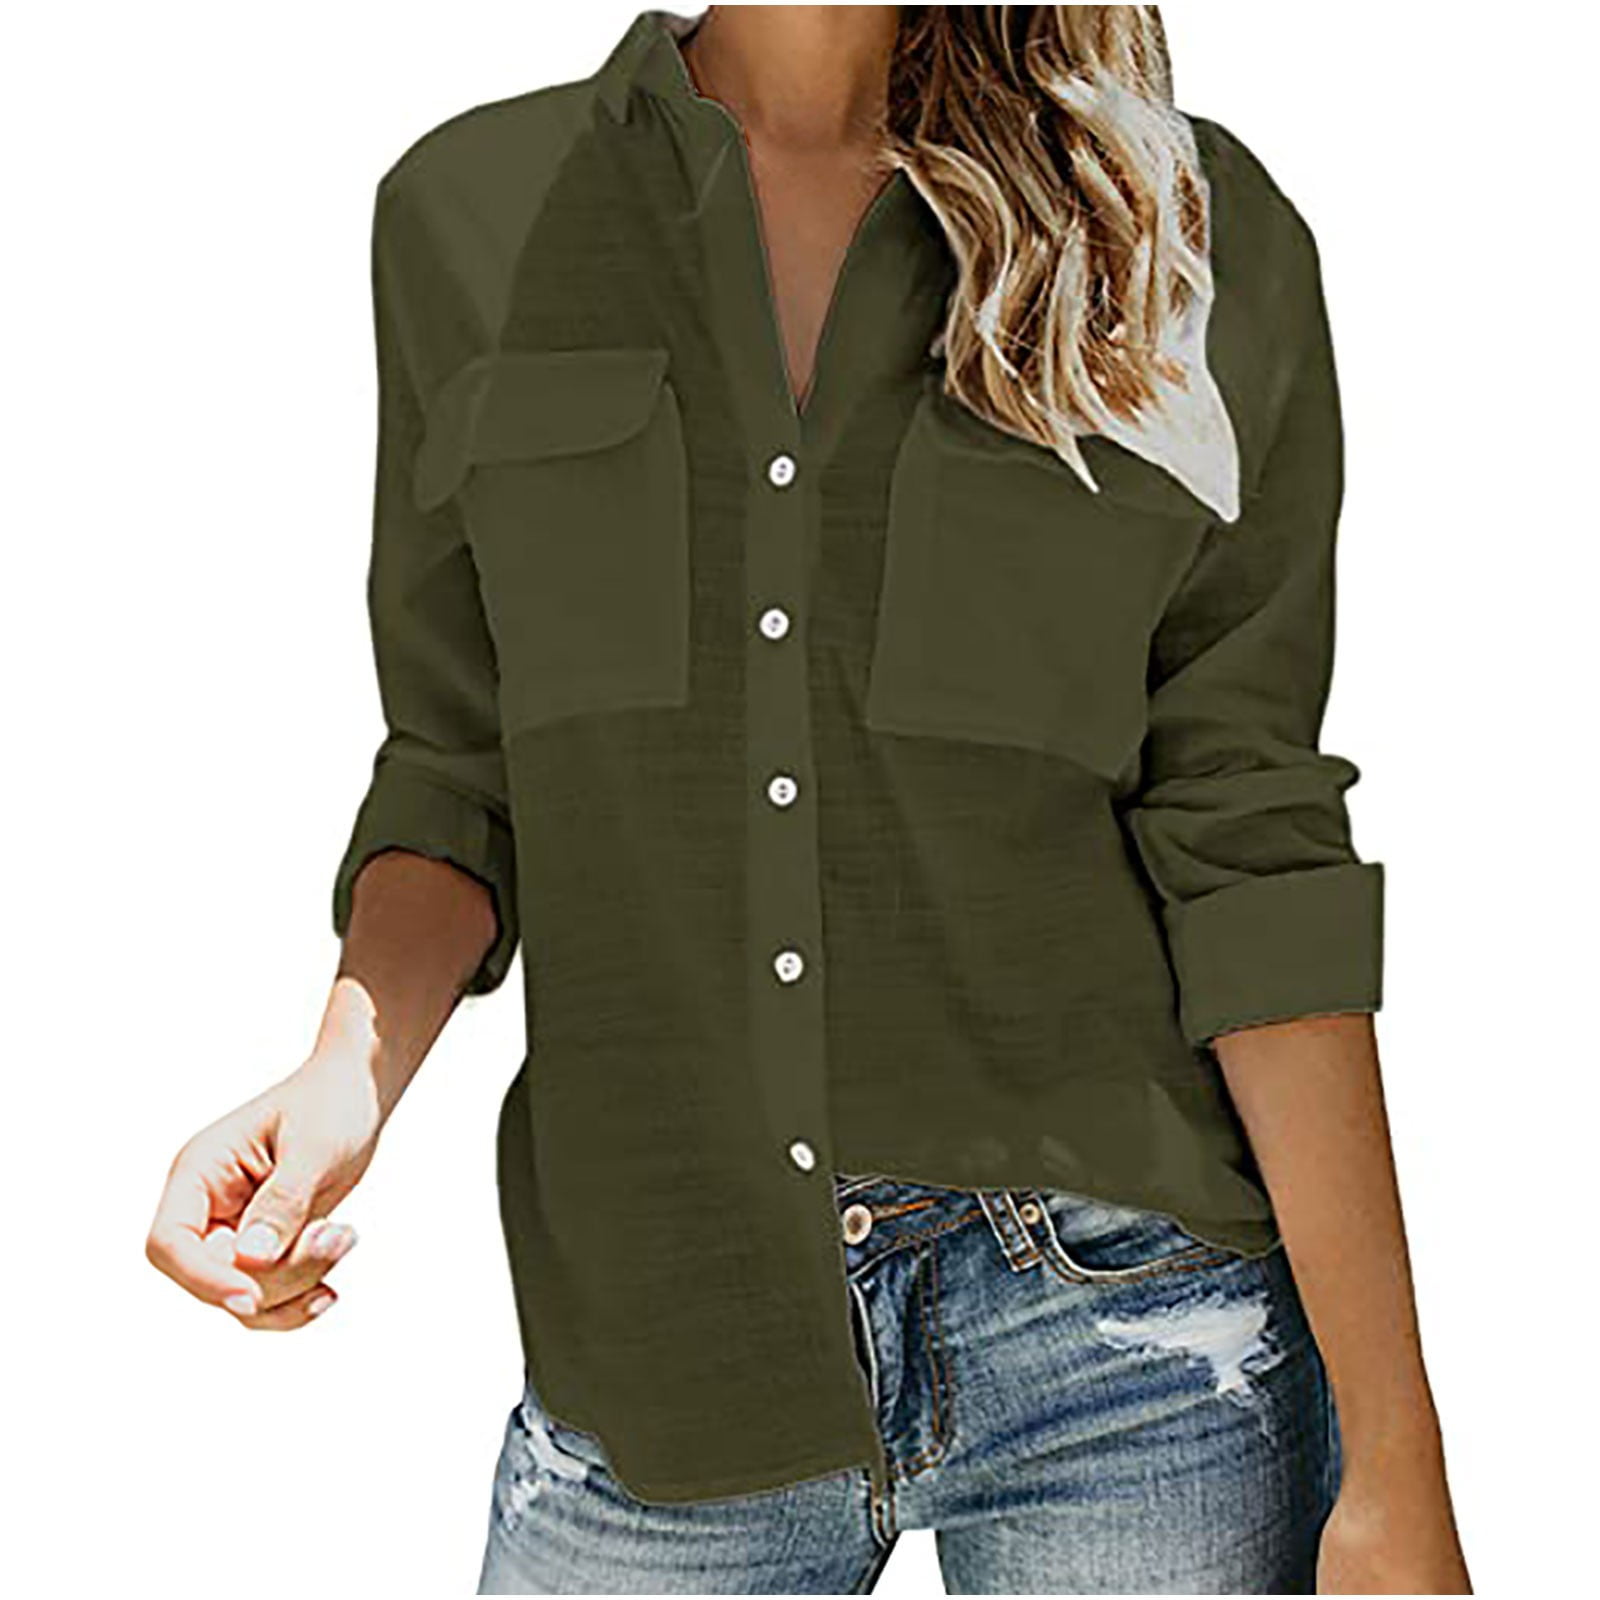 Women's Button-Up Shirts & Flannels